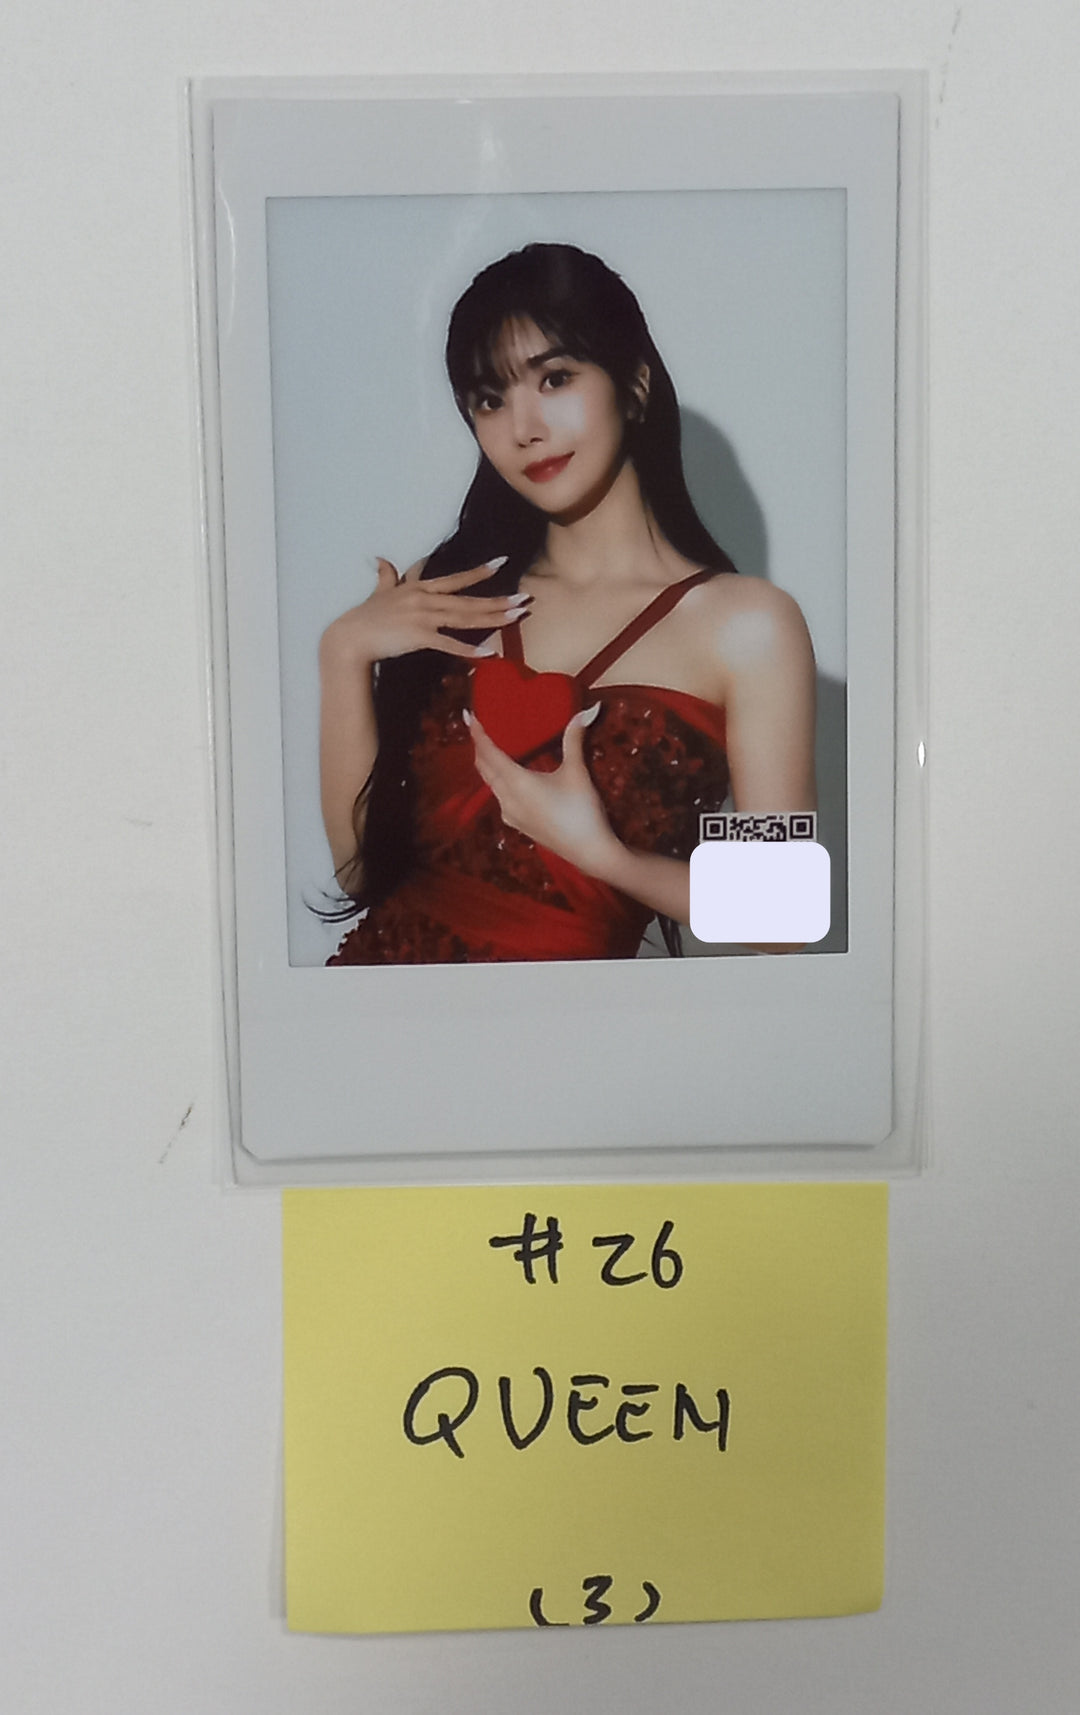 Kwon Eunbi "QUEEN" 3RD Concert - Official MD Trading Photocard & Voice QR Polaroid [23.10.11]